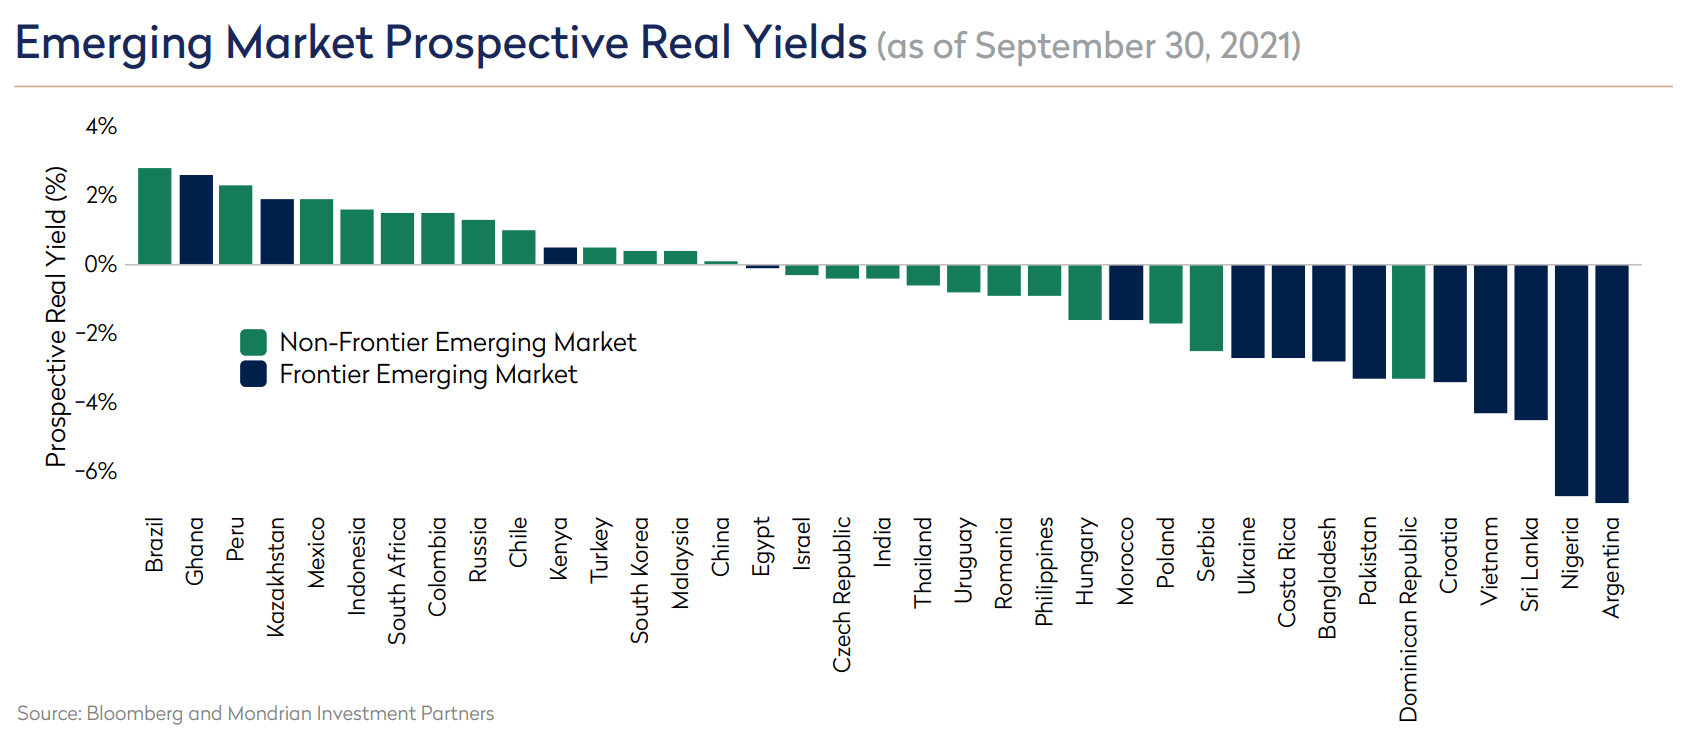 Emerging market prospective real yields